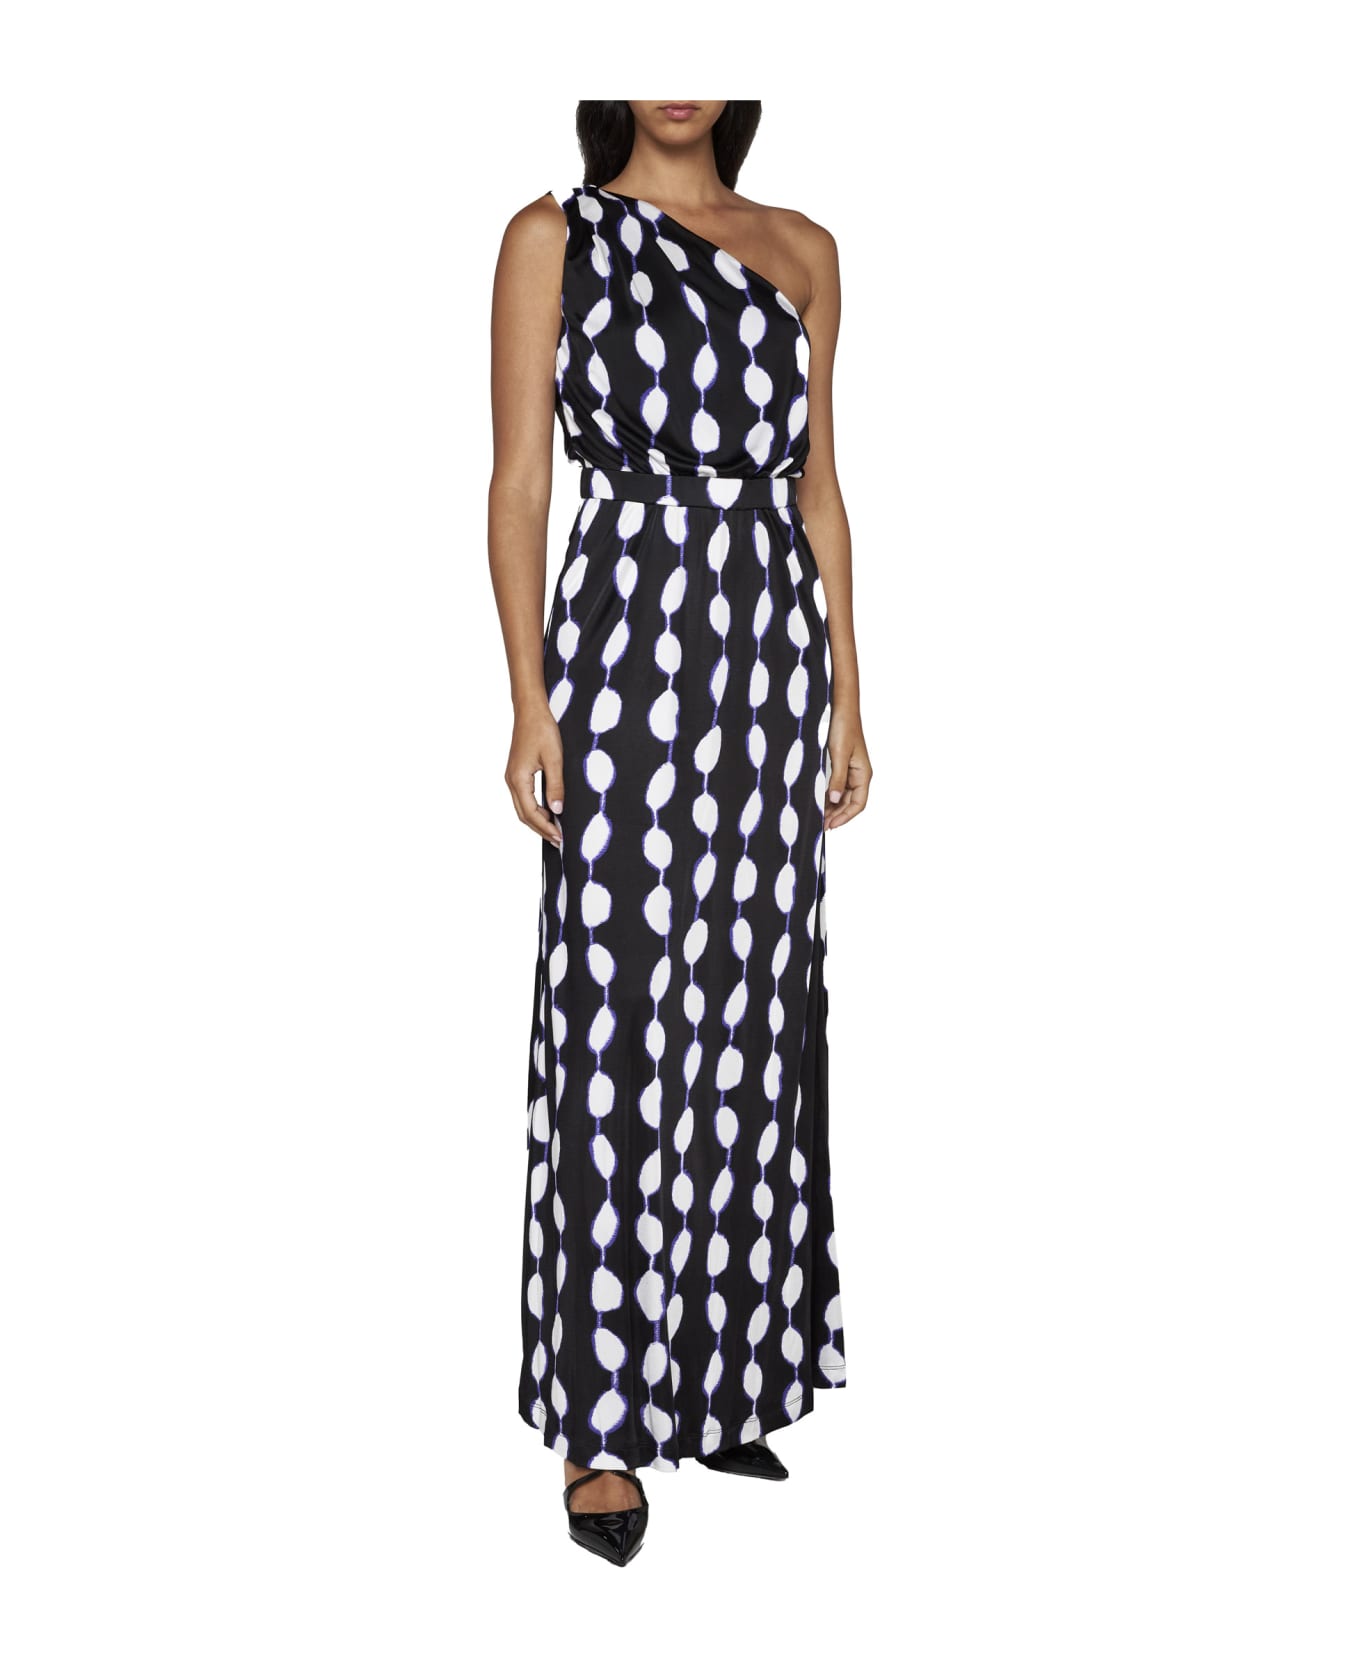 Diane Von Furstenberg Dress - Shibori dot lg black